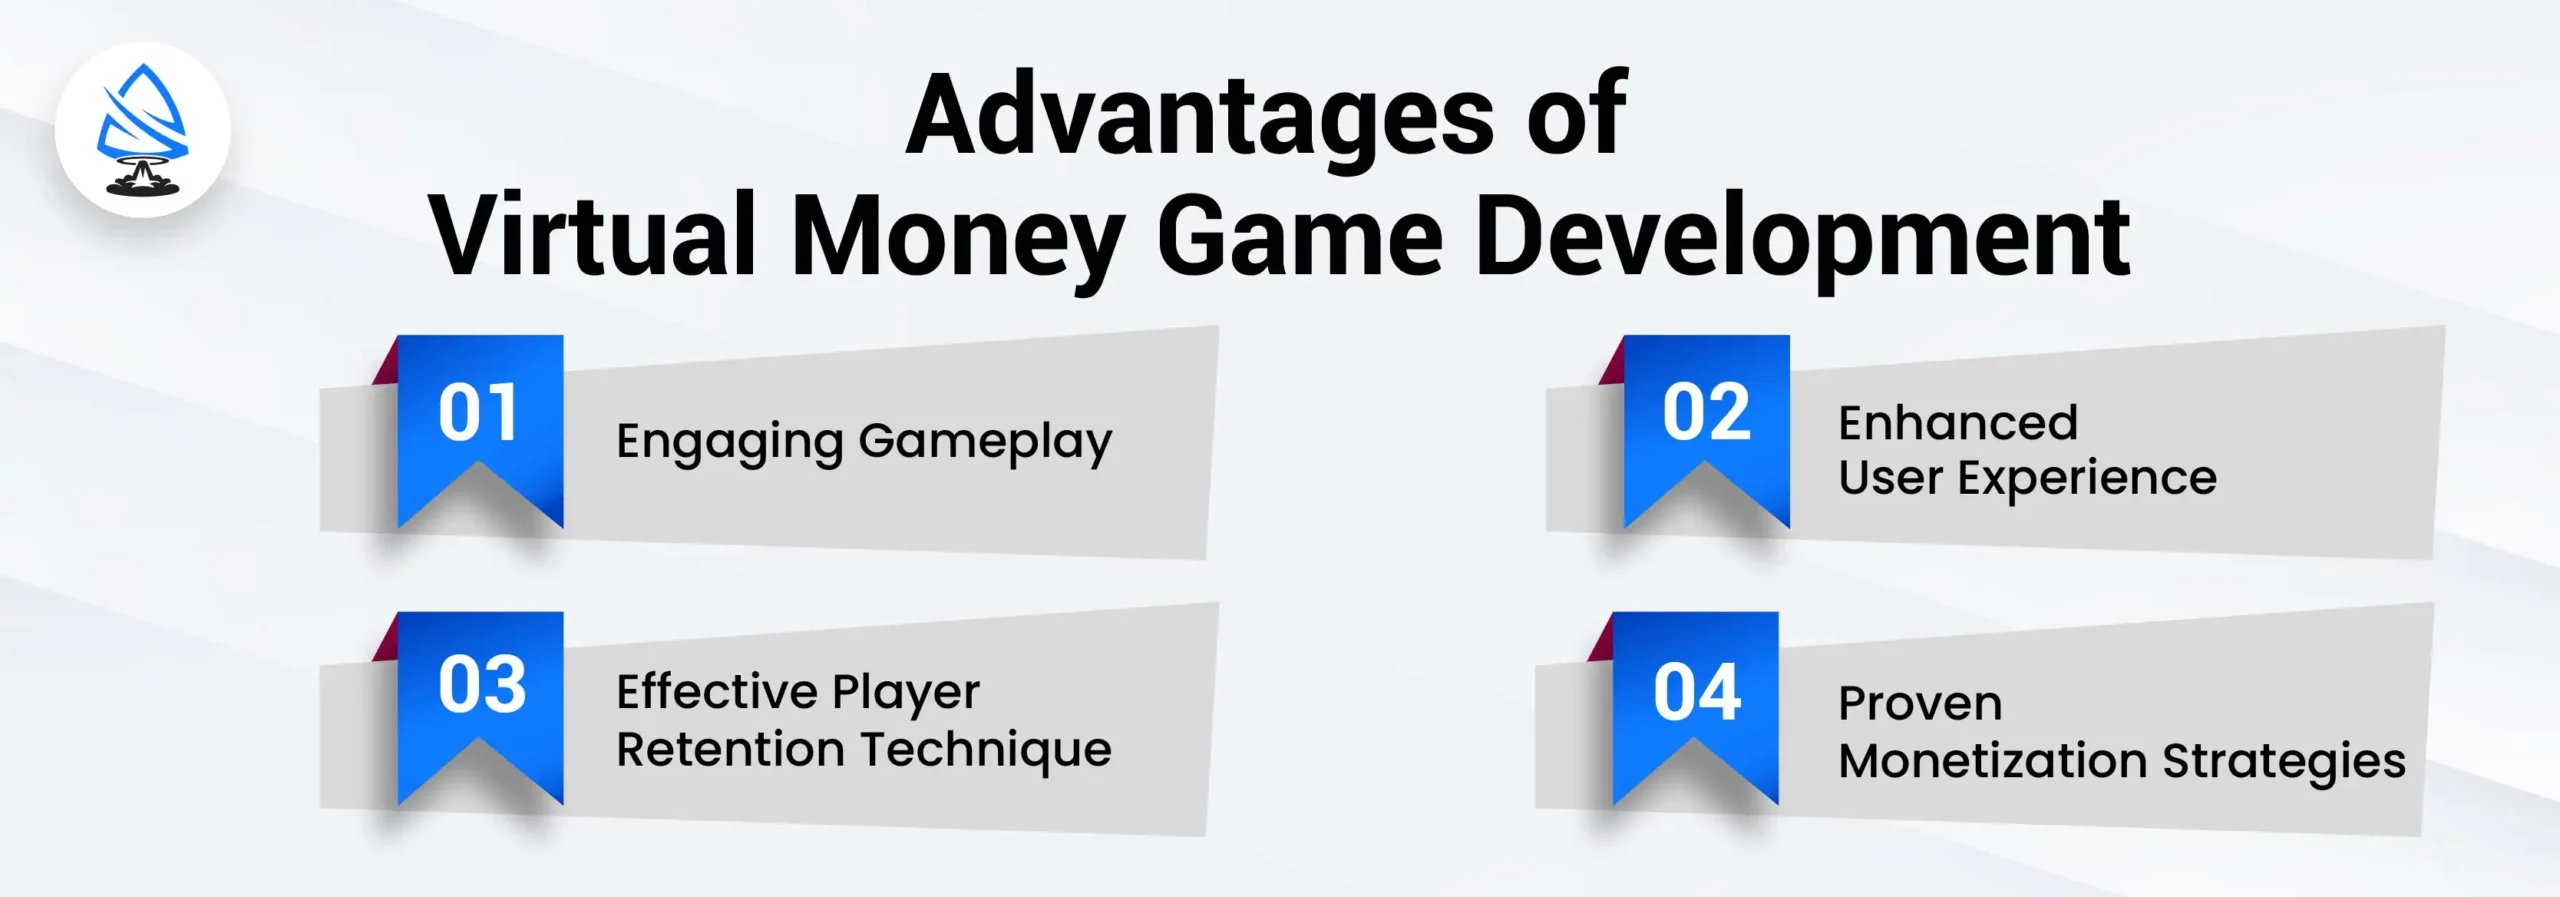 Advantages of Virtual Money Game Development